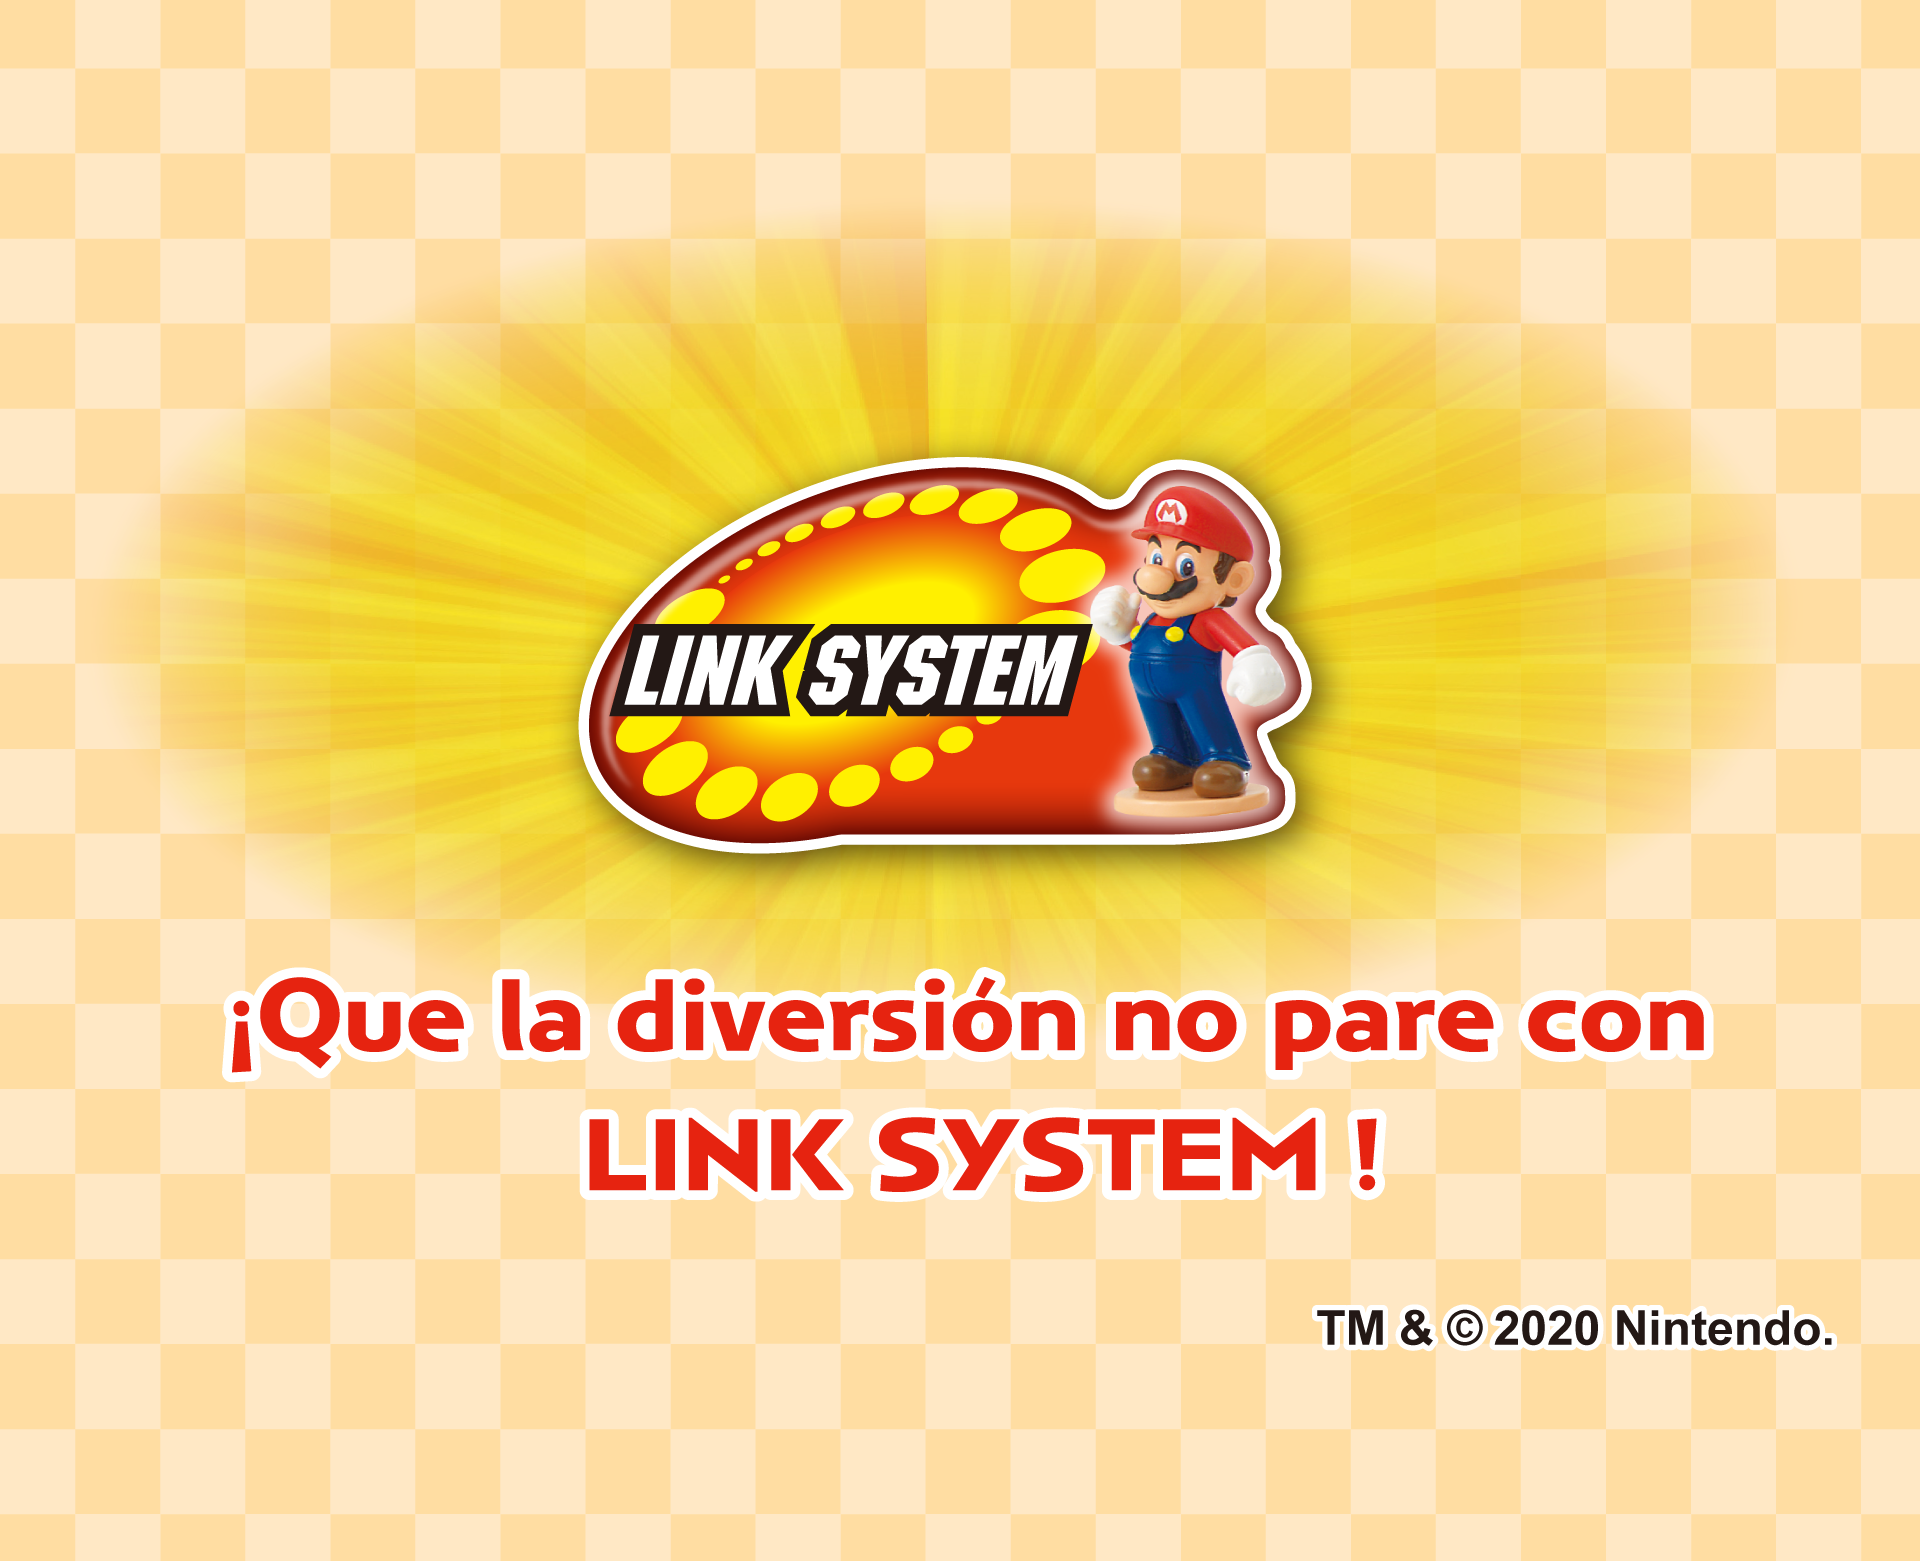 Super Mario™ LINK SYSTEM
